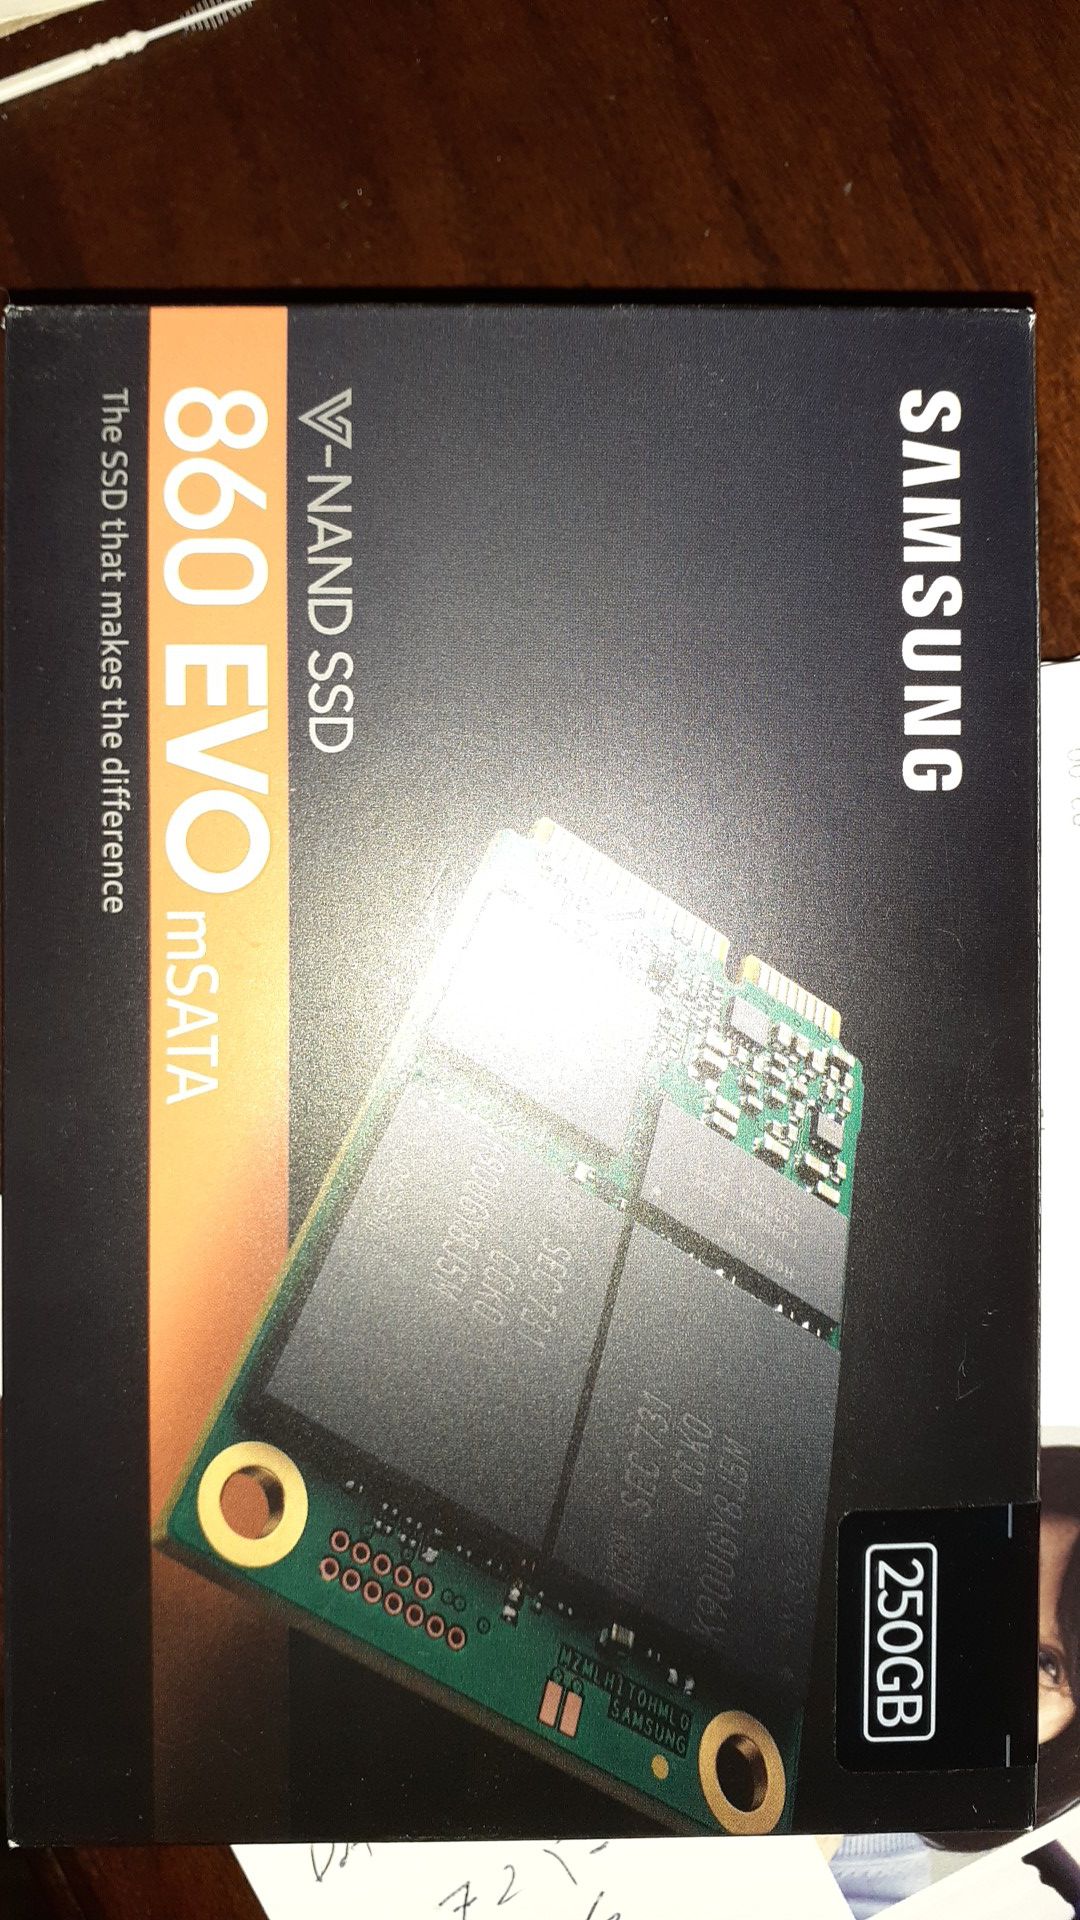 Samsung 860 evo mSata 250gb ssd hard drive